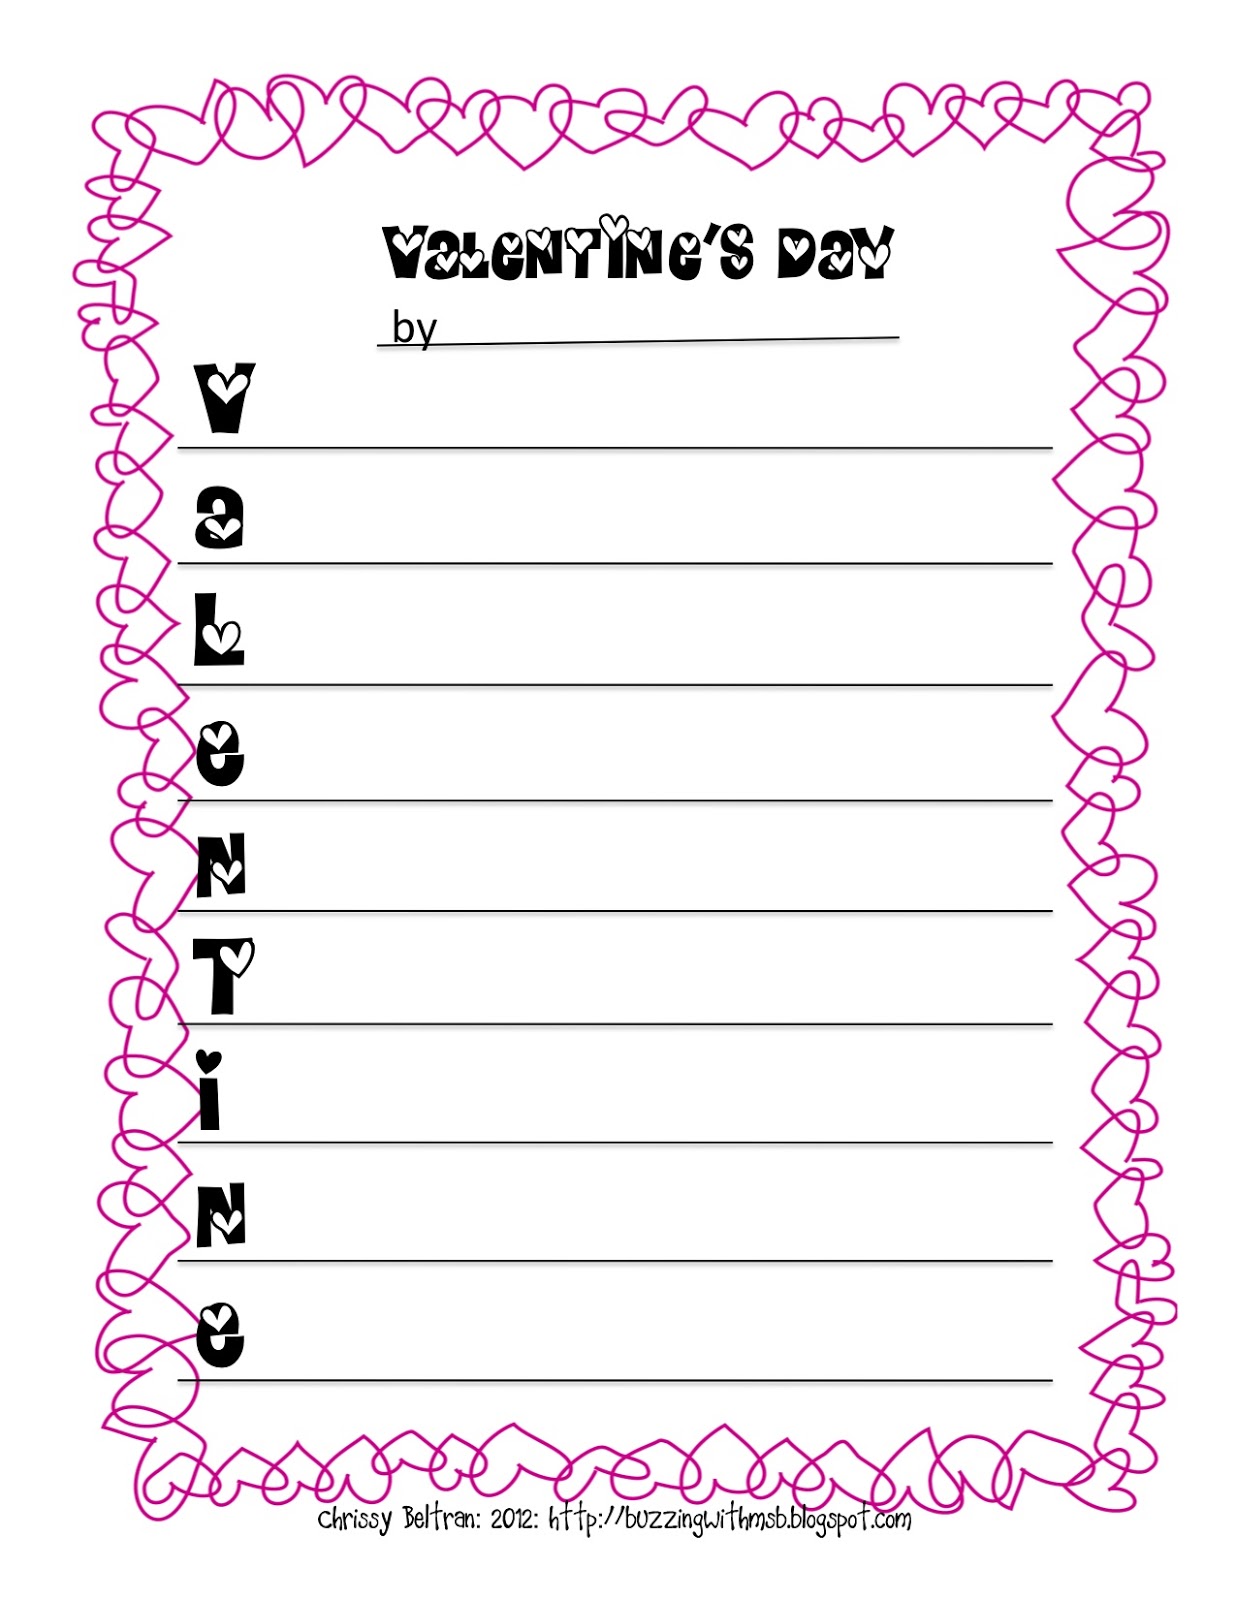 3-6 Free Resources: Valentine's Day Acrostic Poem